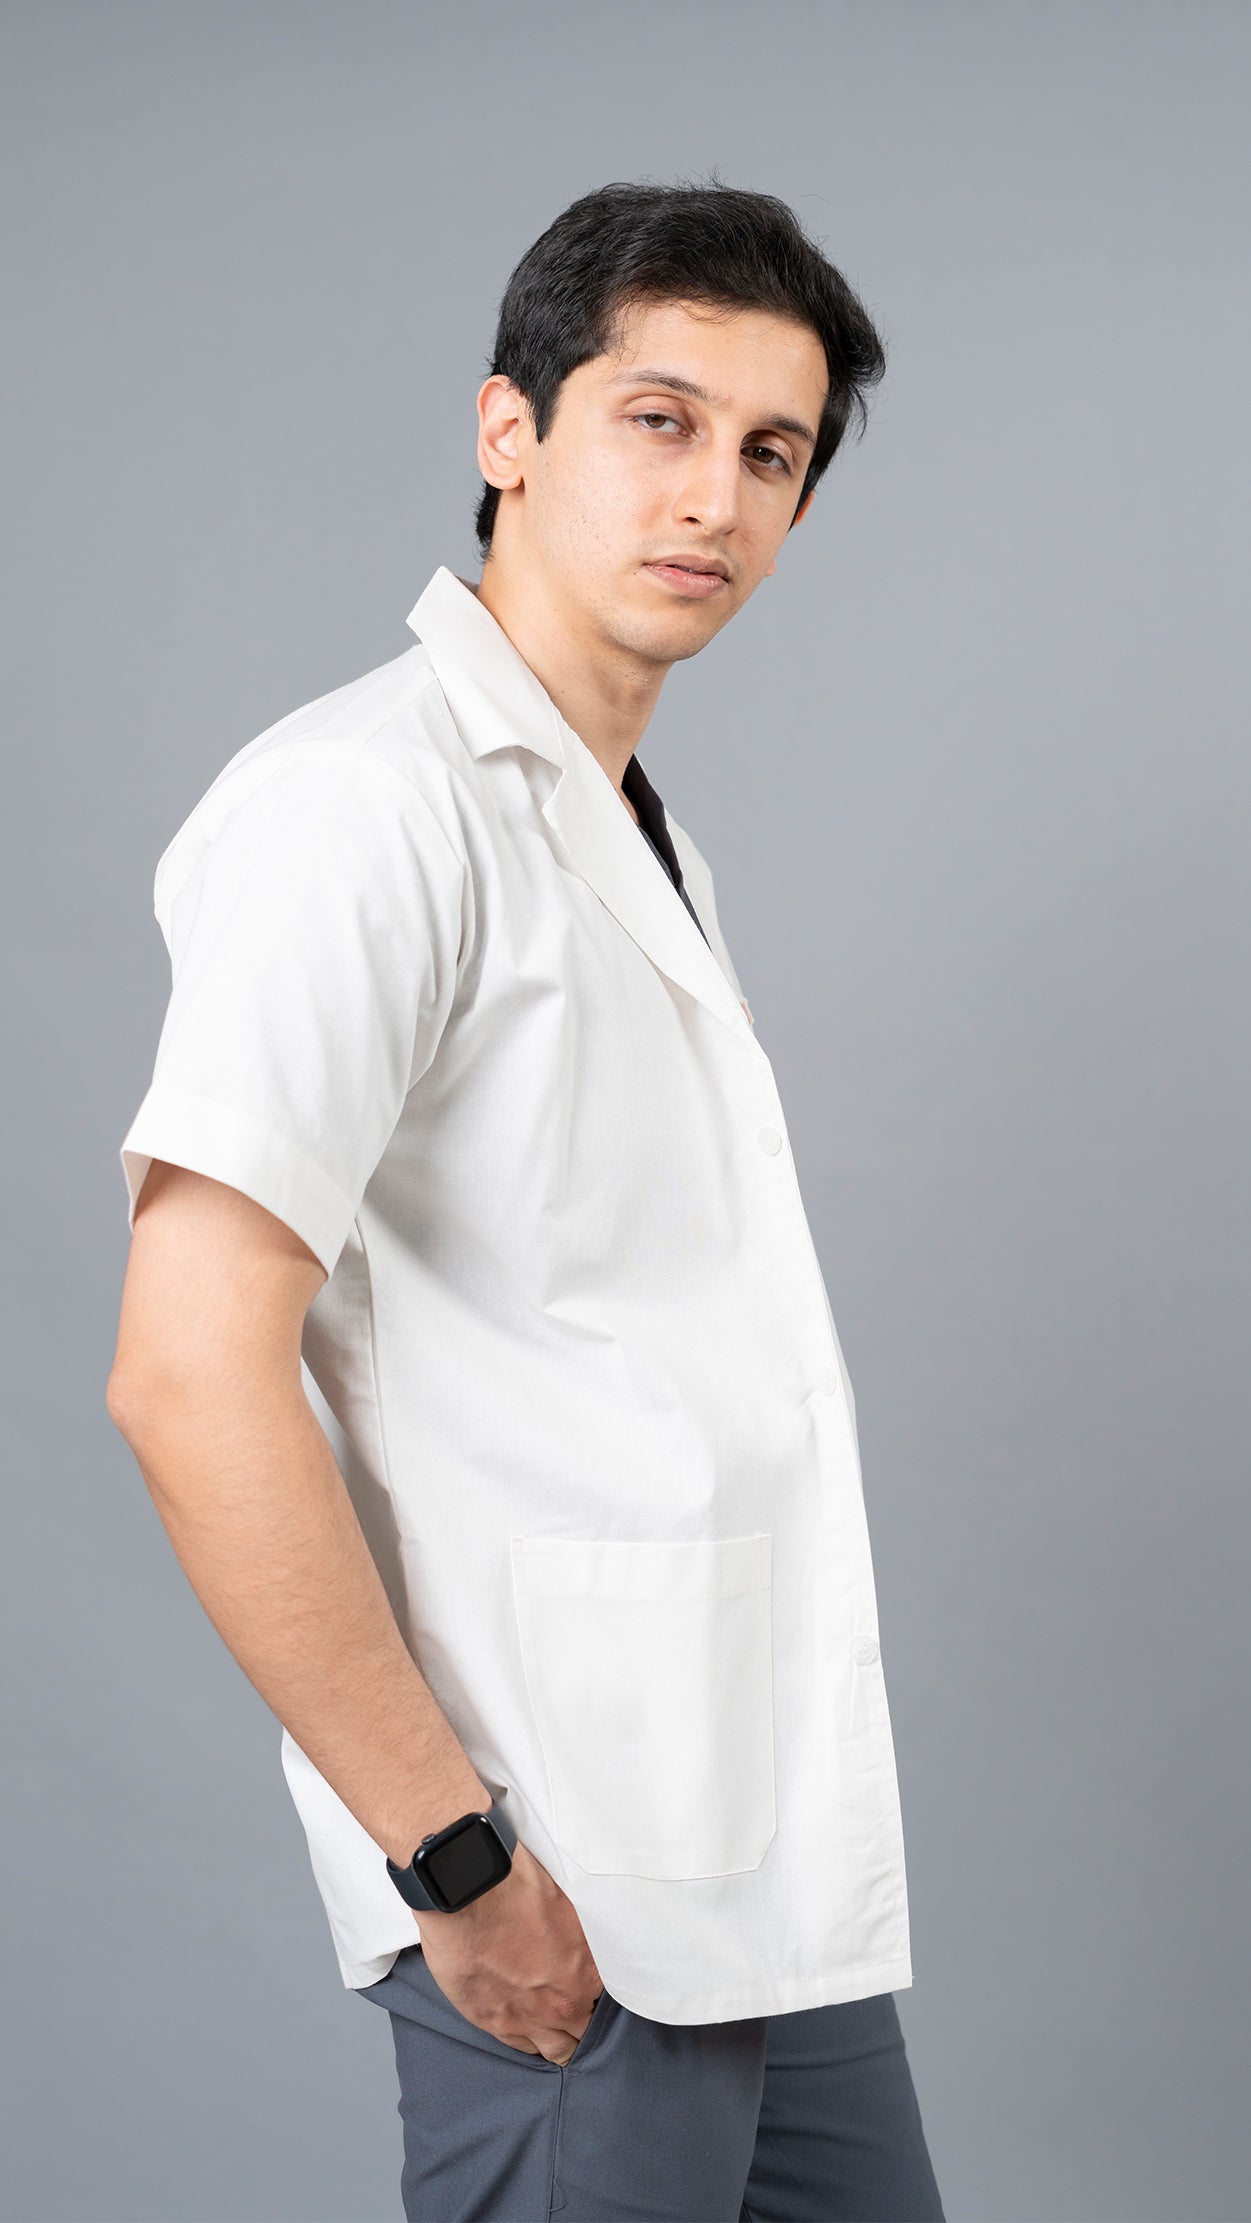 VastraMedwear Half Sleeves Lab Coat/ Apron for Chemistry Lab and Medical Students Men